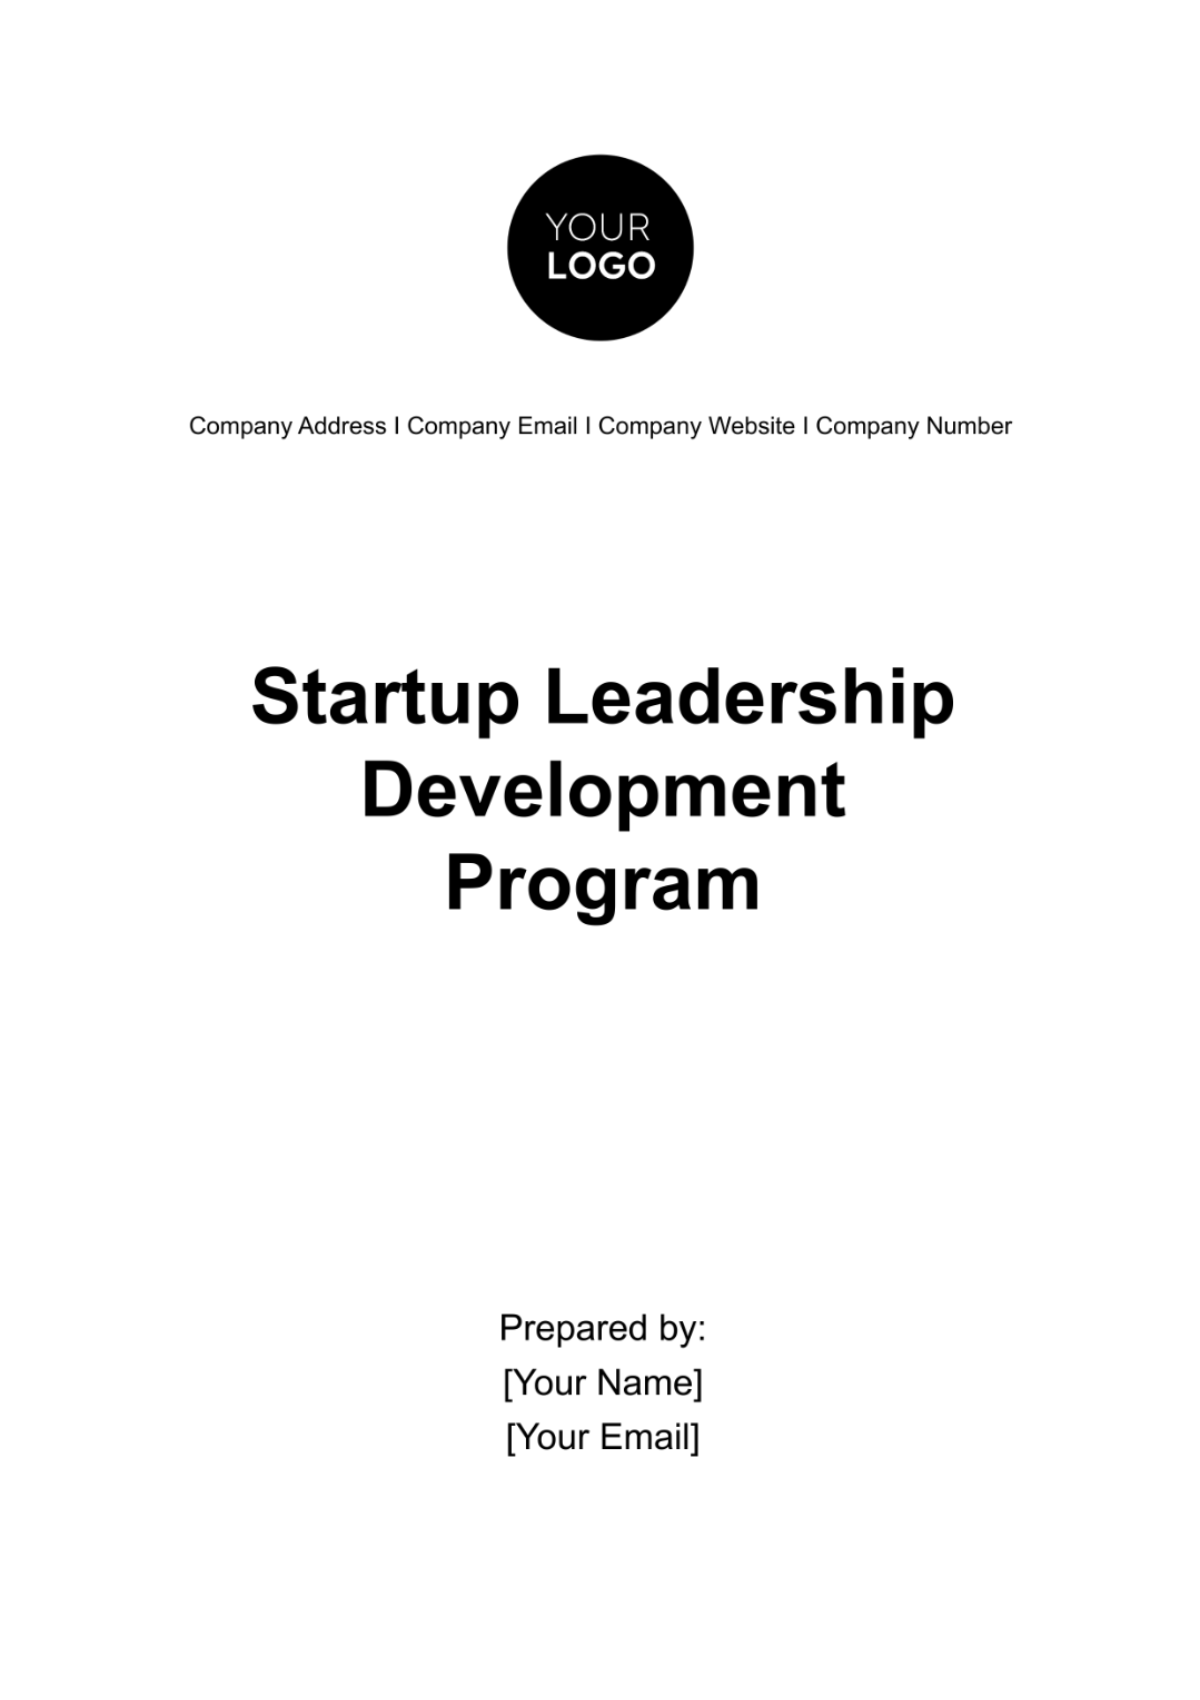 Startup Leadership Development Program Template